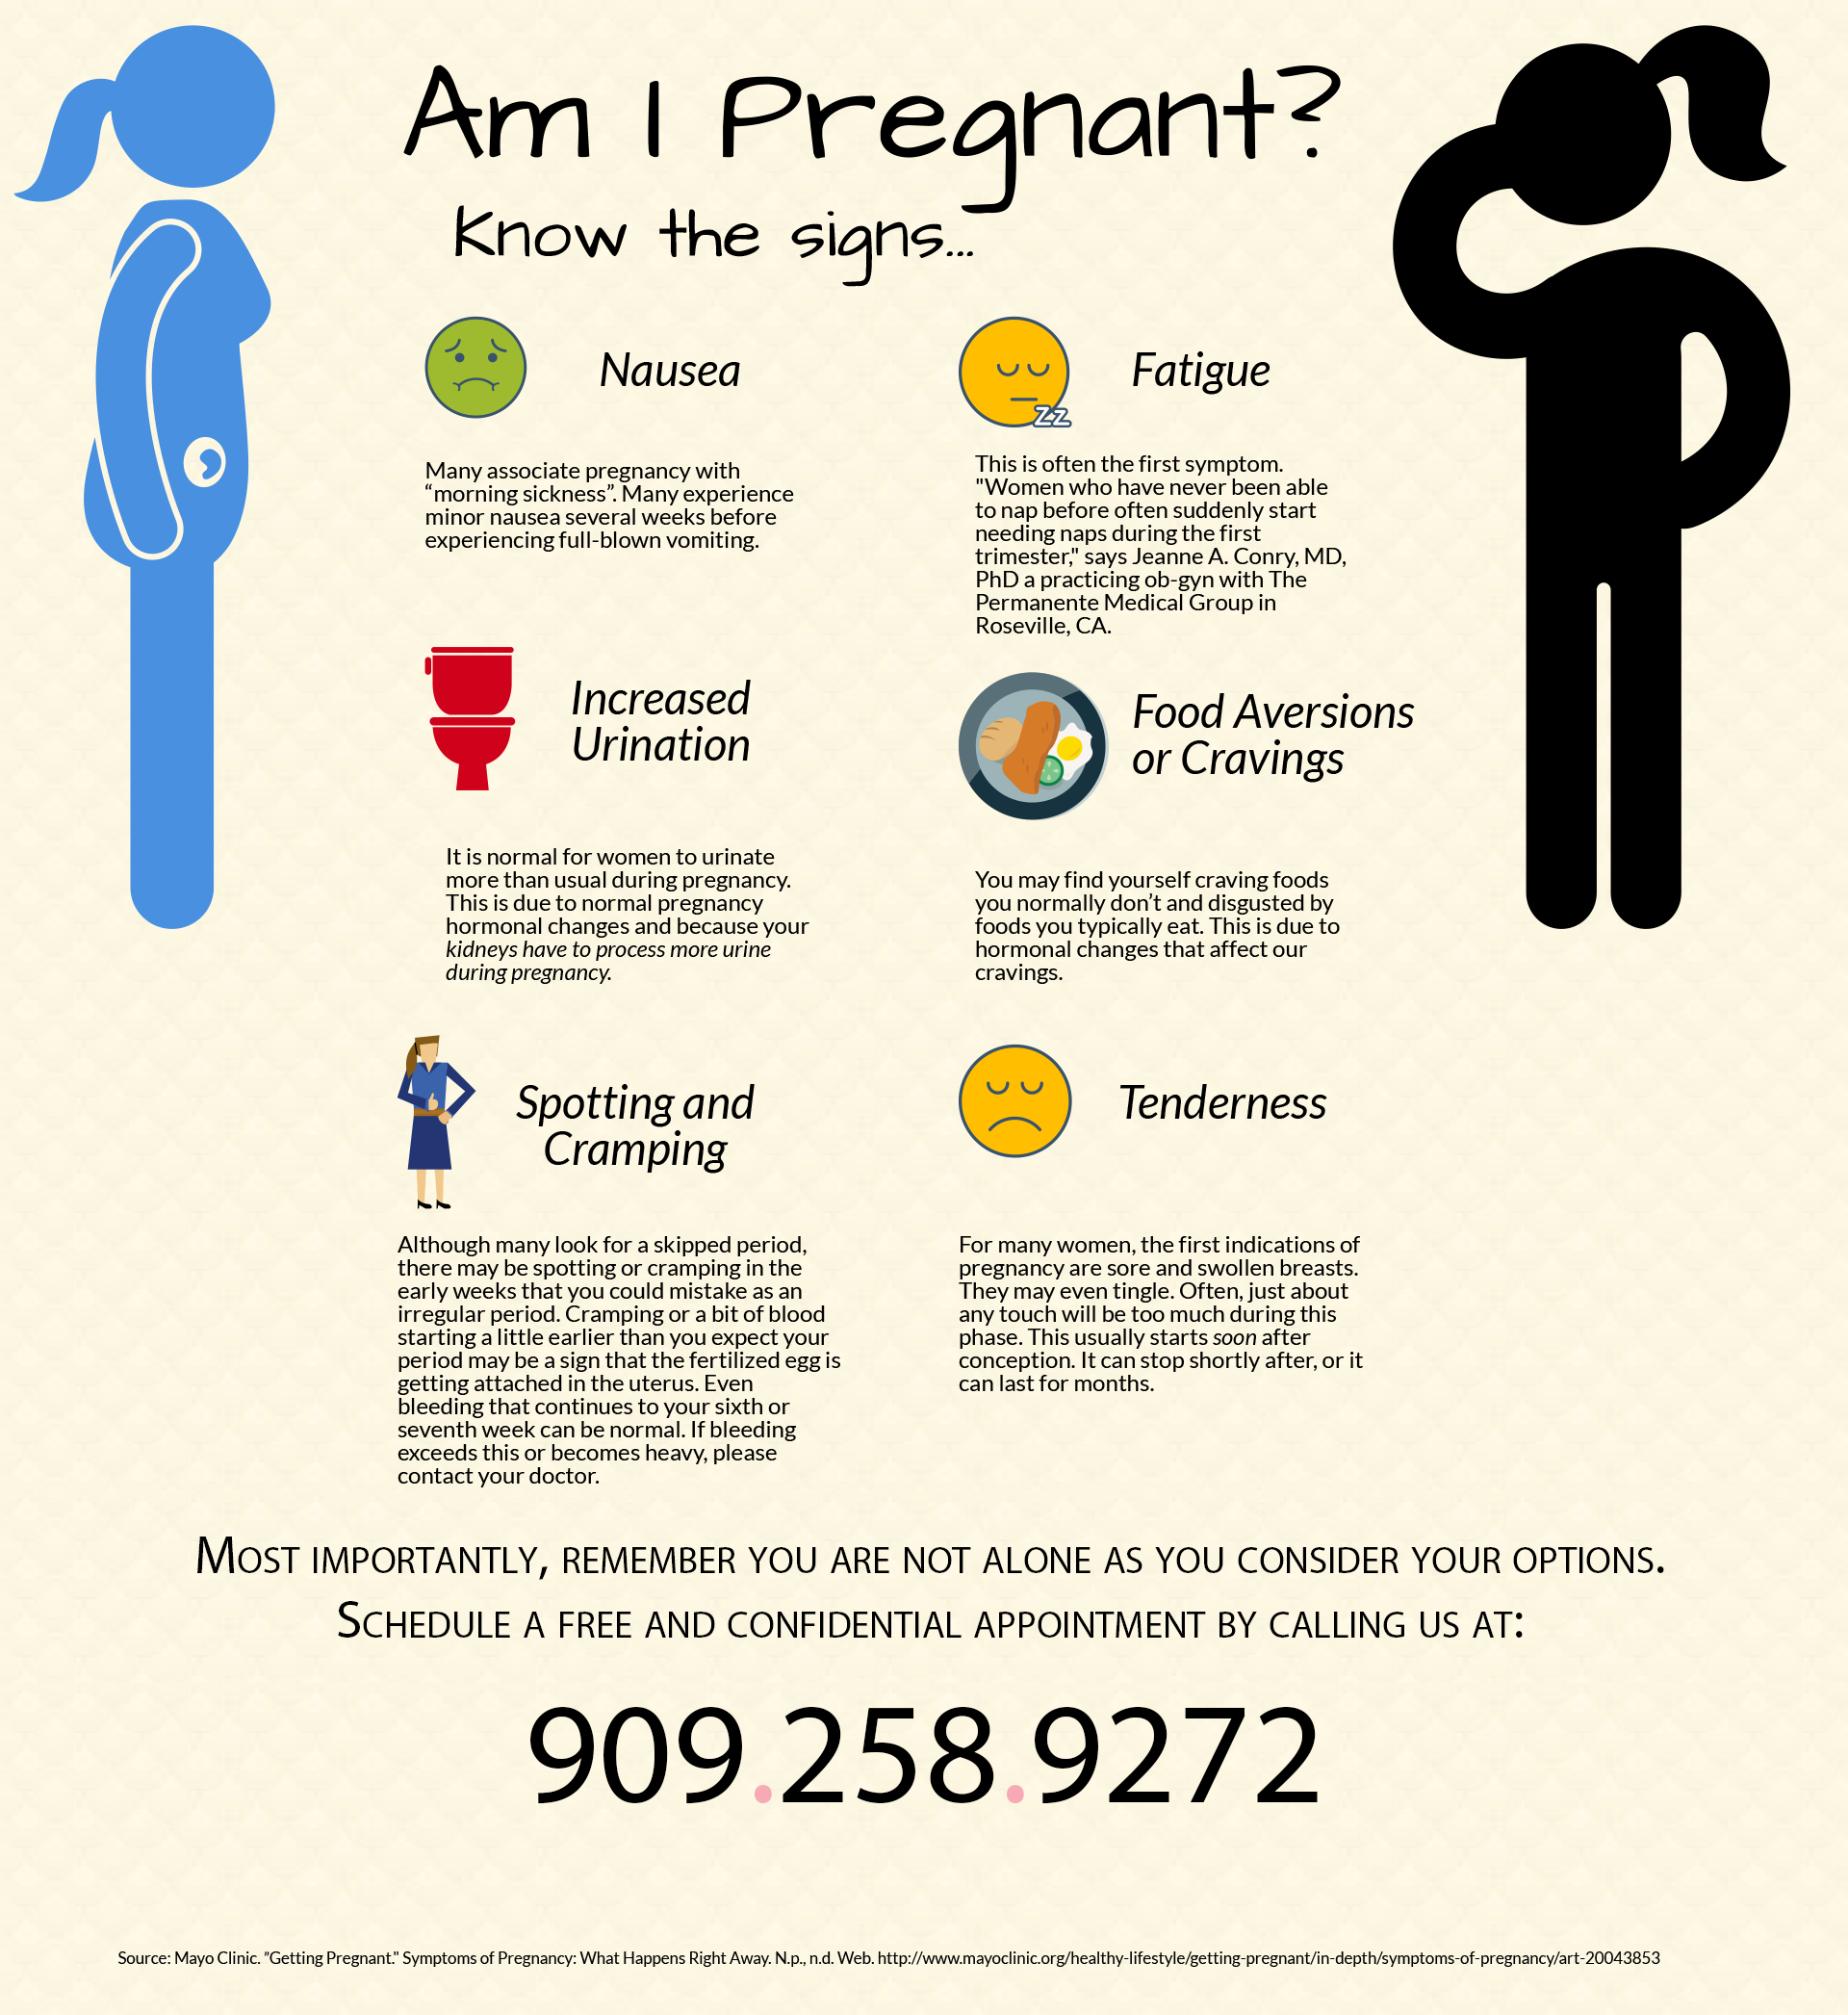 symptoms of early pregnancy